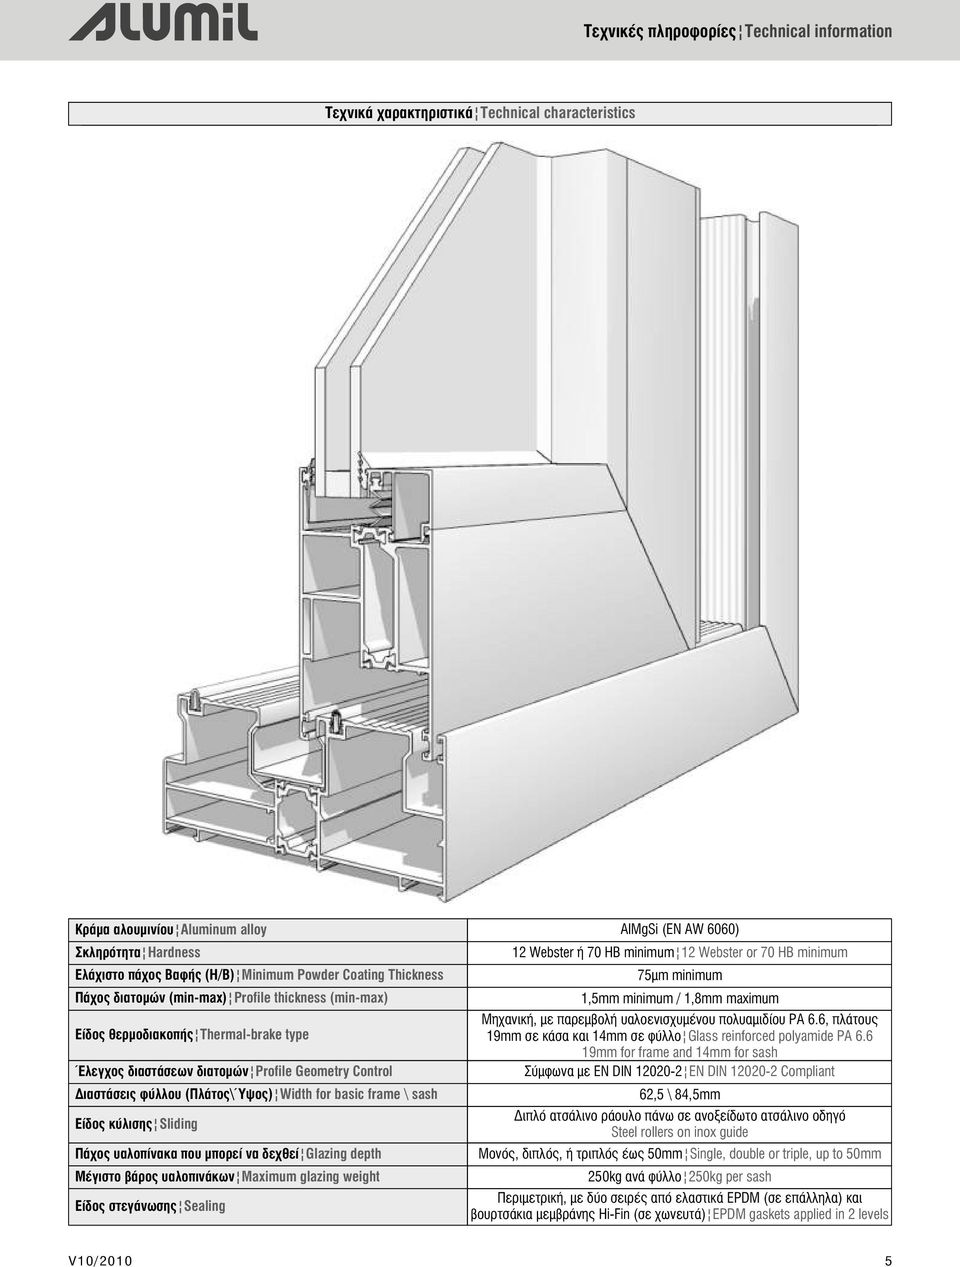 basic frame \ sash Είδος κύλισης Sliding Πάχος υαλοπίνακα που μπορεί να δεχθεί Glazing depth Μέγιστο βάρος υαλοπινάκων Maximum glazing weight Είδος στεγάνωσης Sealing AlMgSi (EN AW 6060) 12 Webster ή